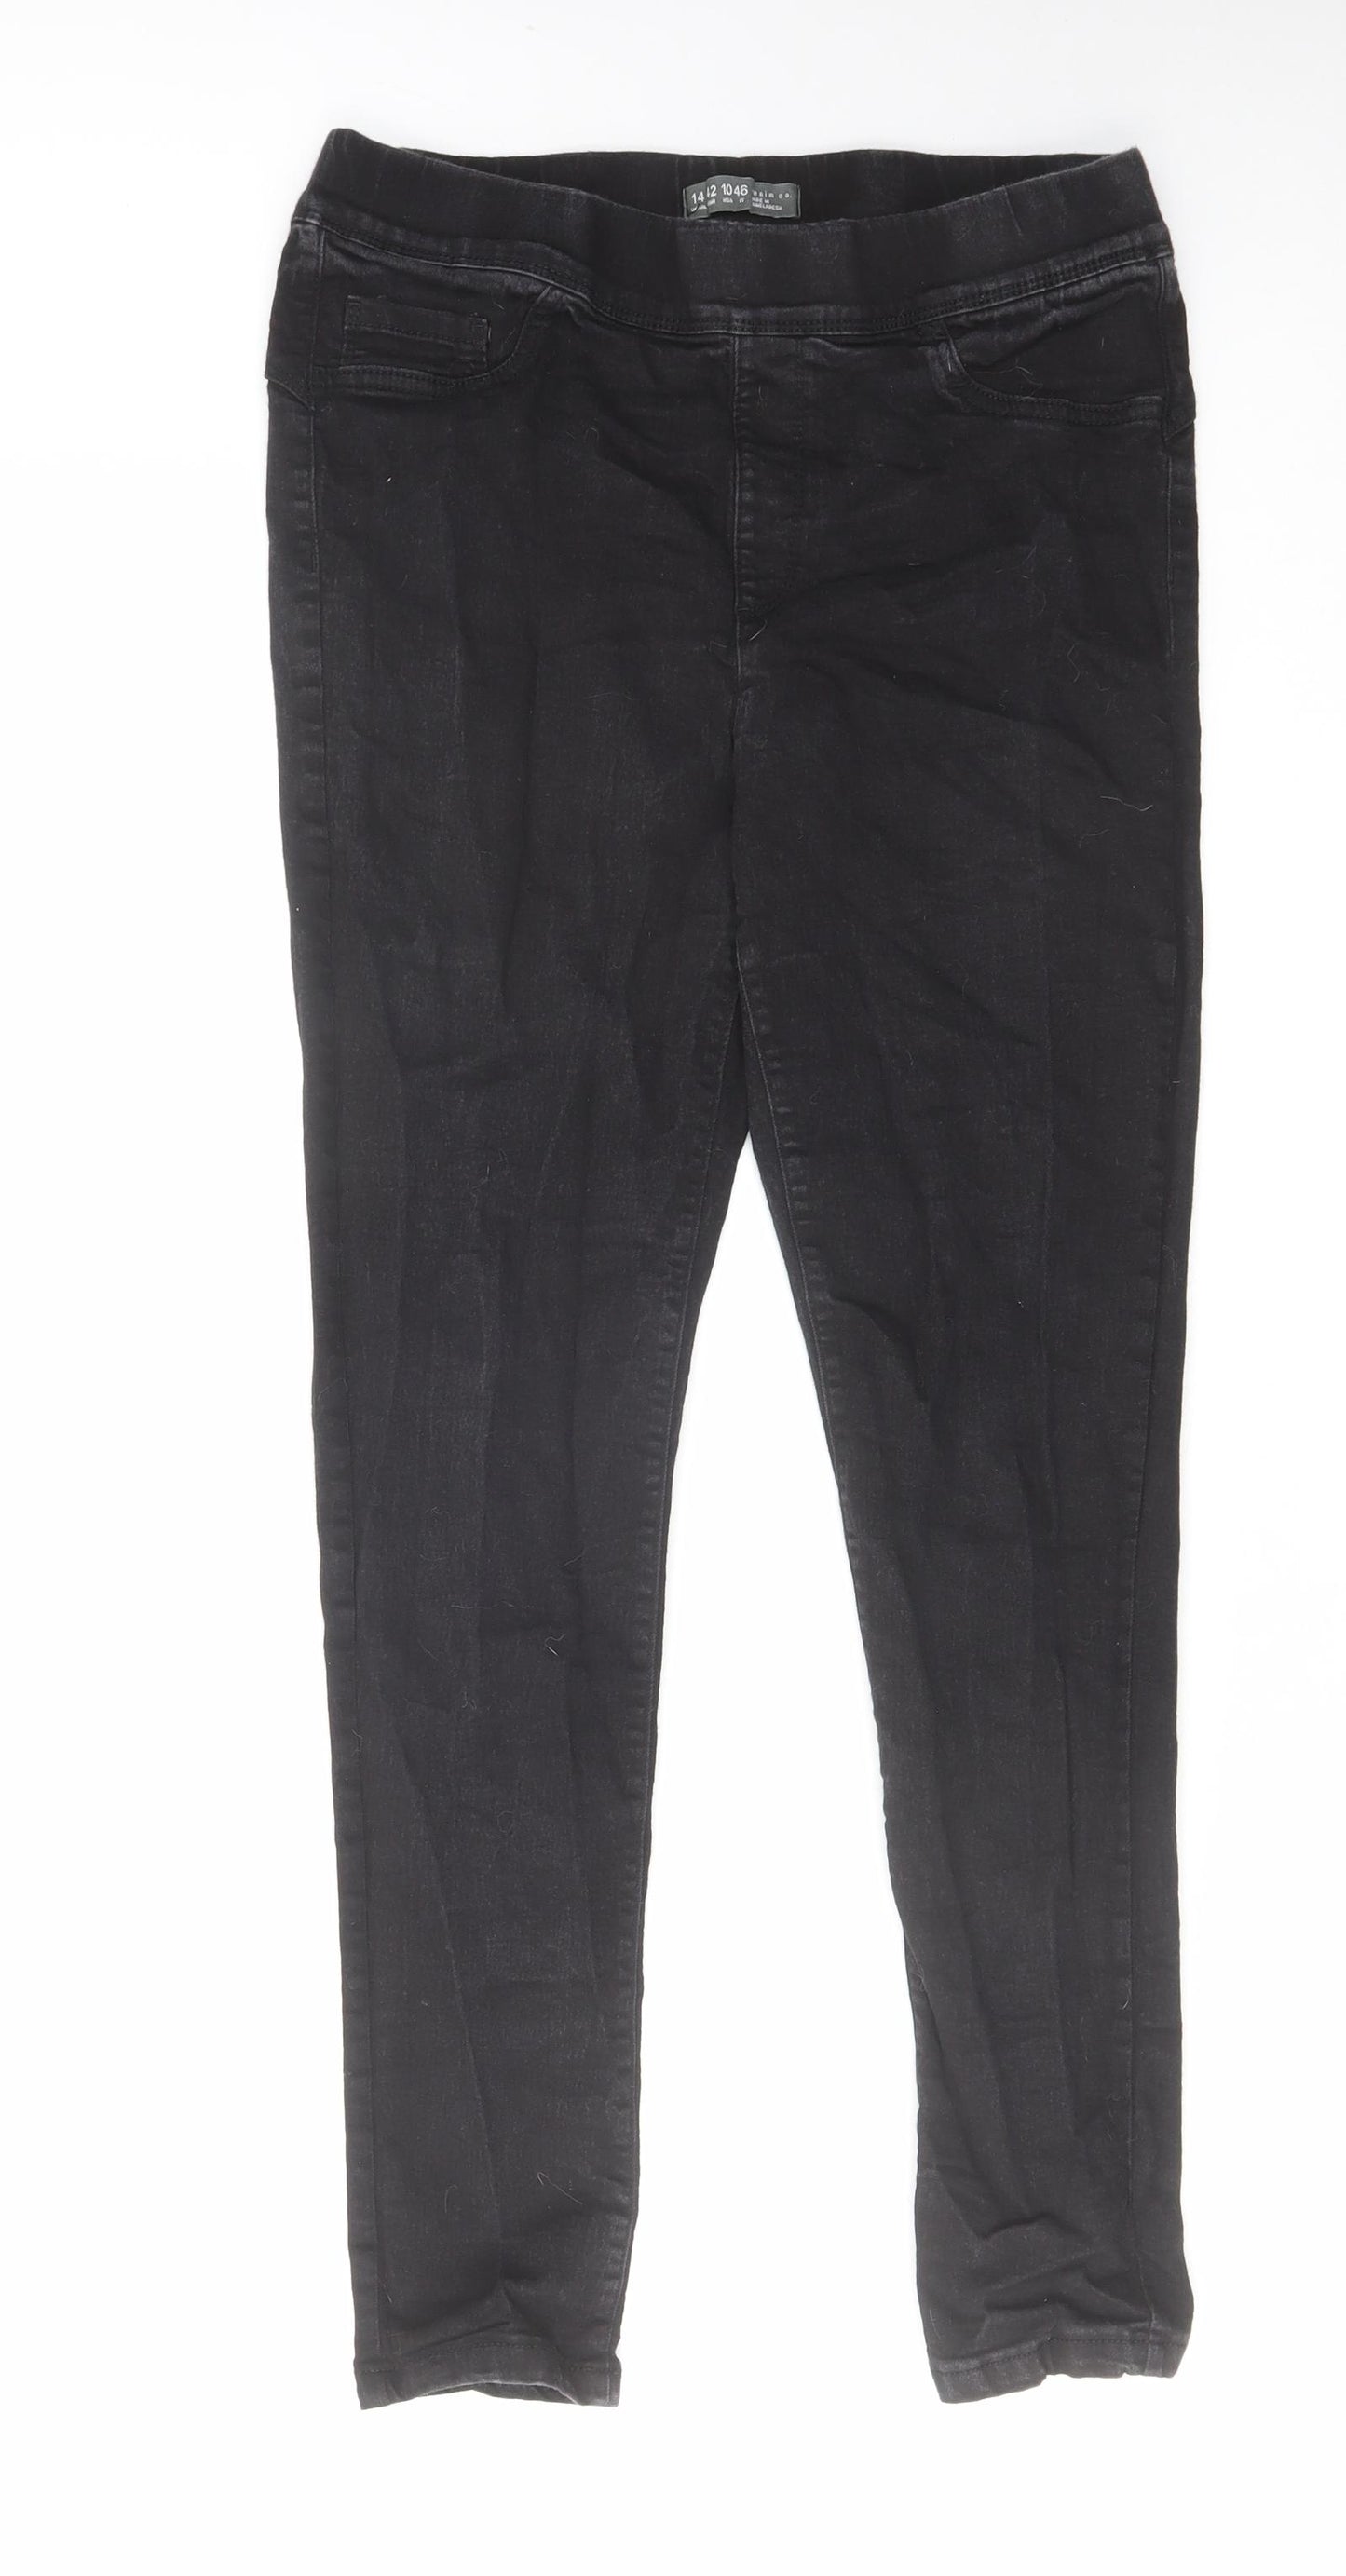 Denim & Co. Womens Black Cotton Jegging Jeans Size 14 L28 in Regular